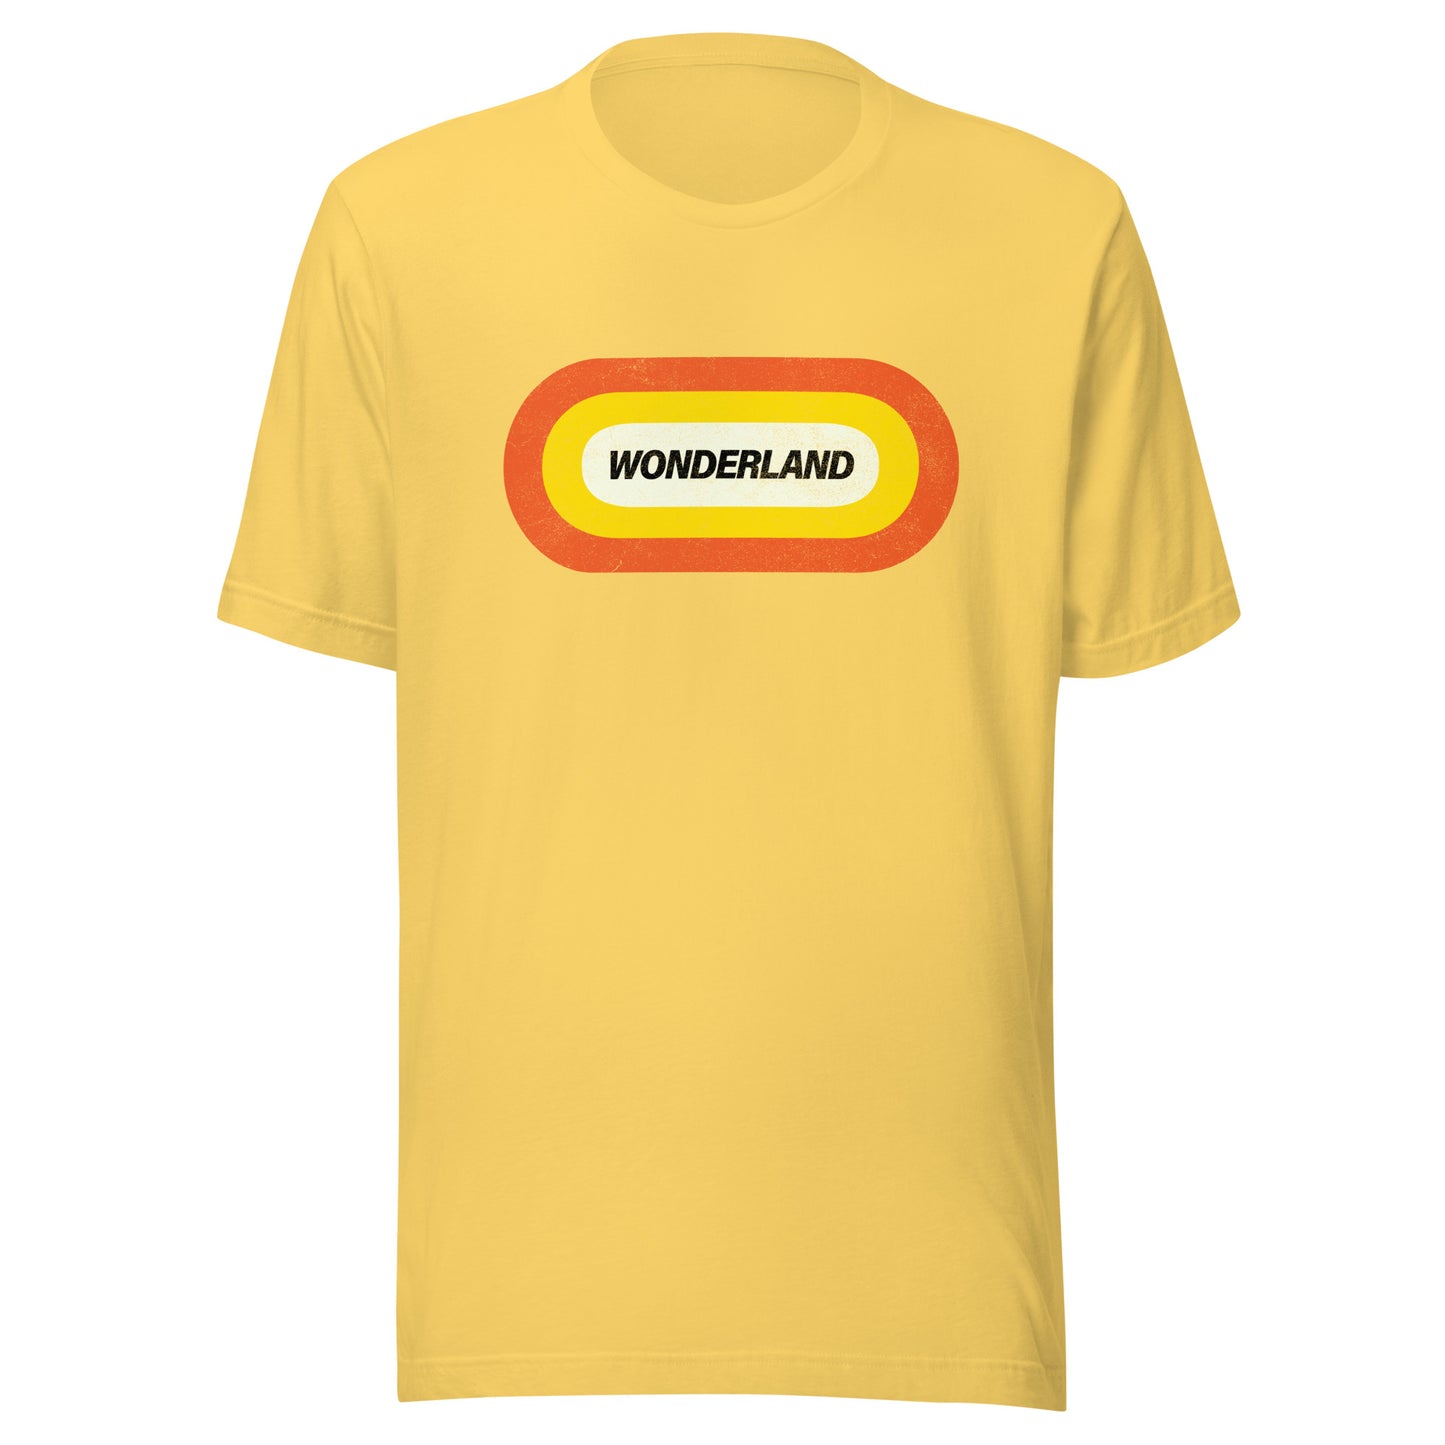 Wonderland Park T-Shirt - Revere, MA | Vintage Mens & Womens Graphic Tee